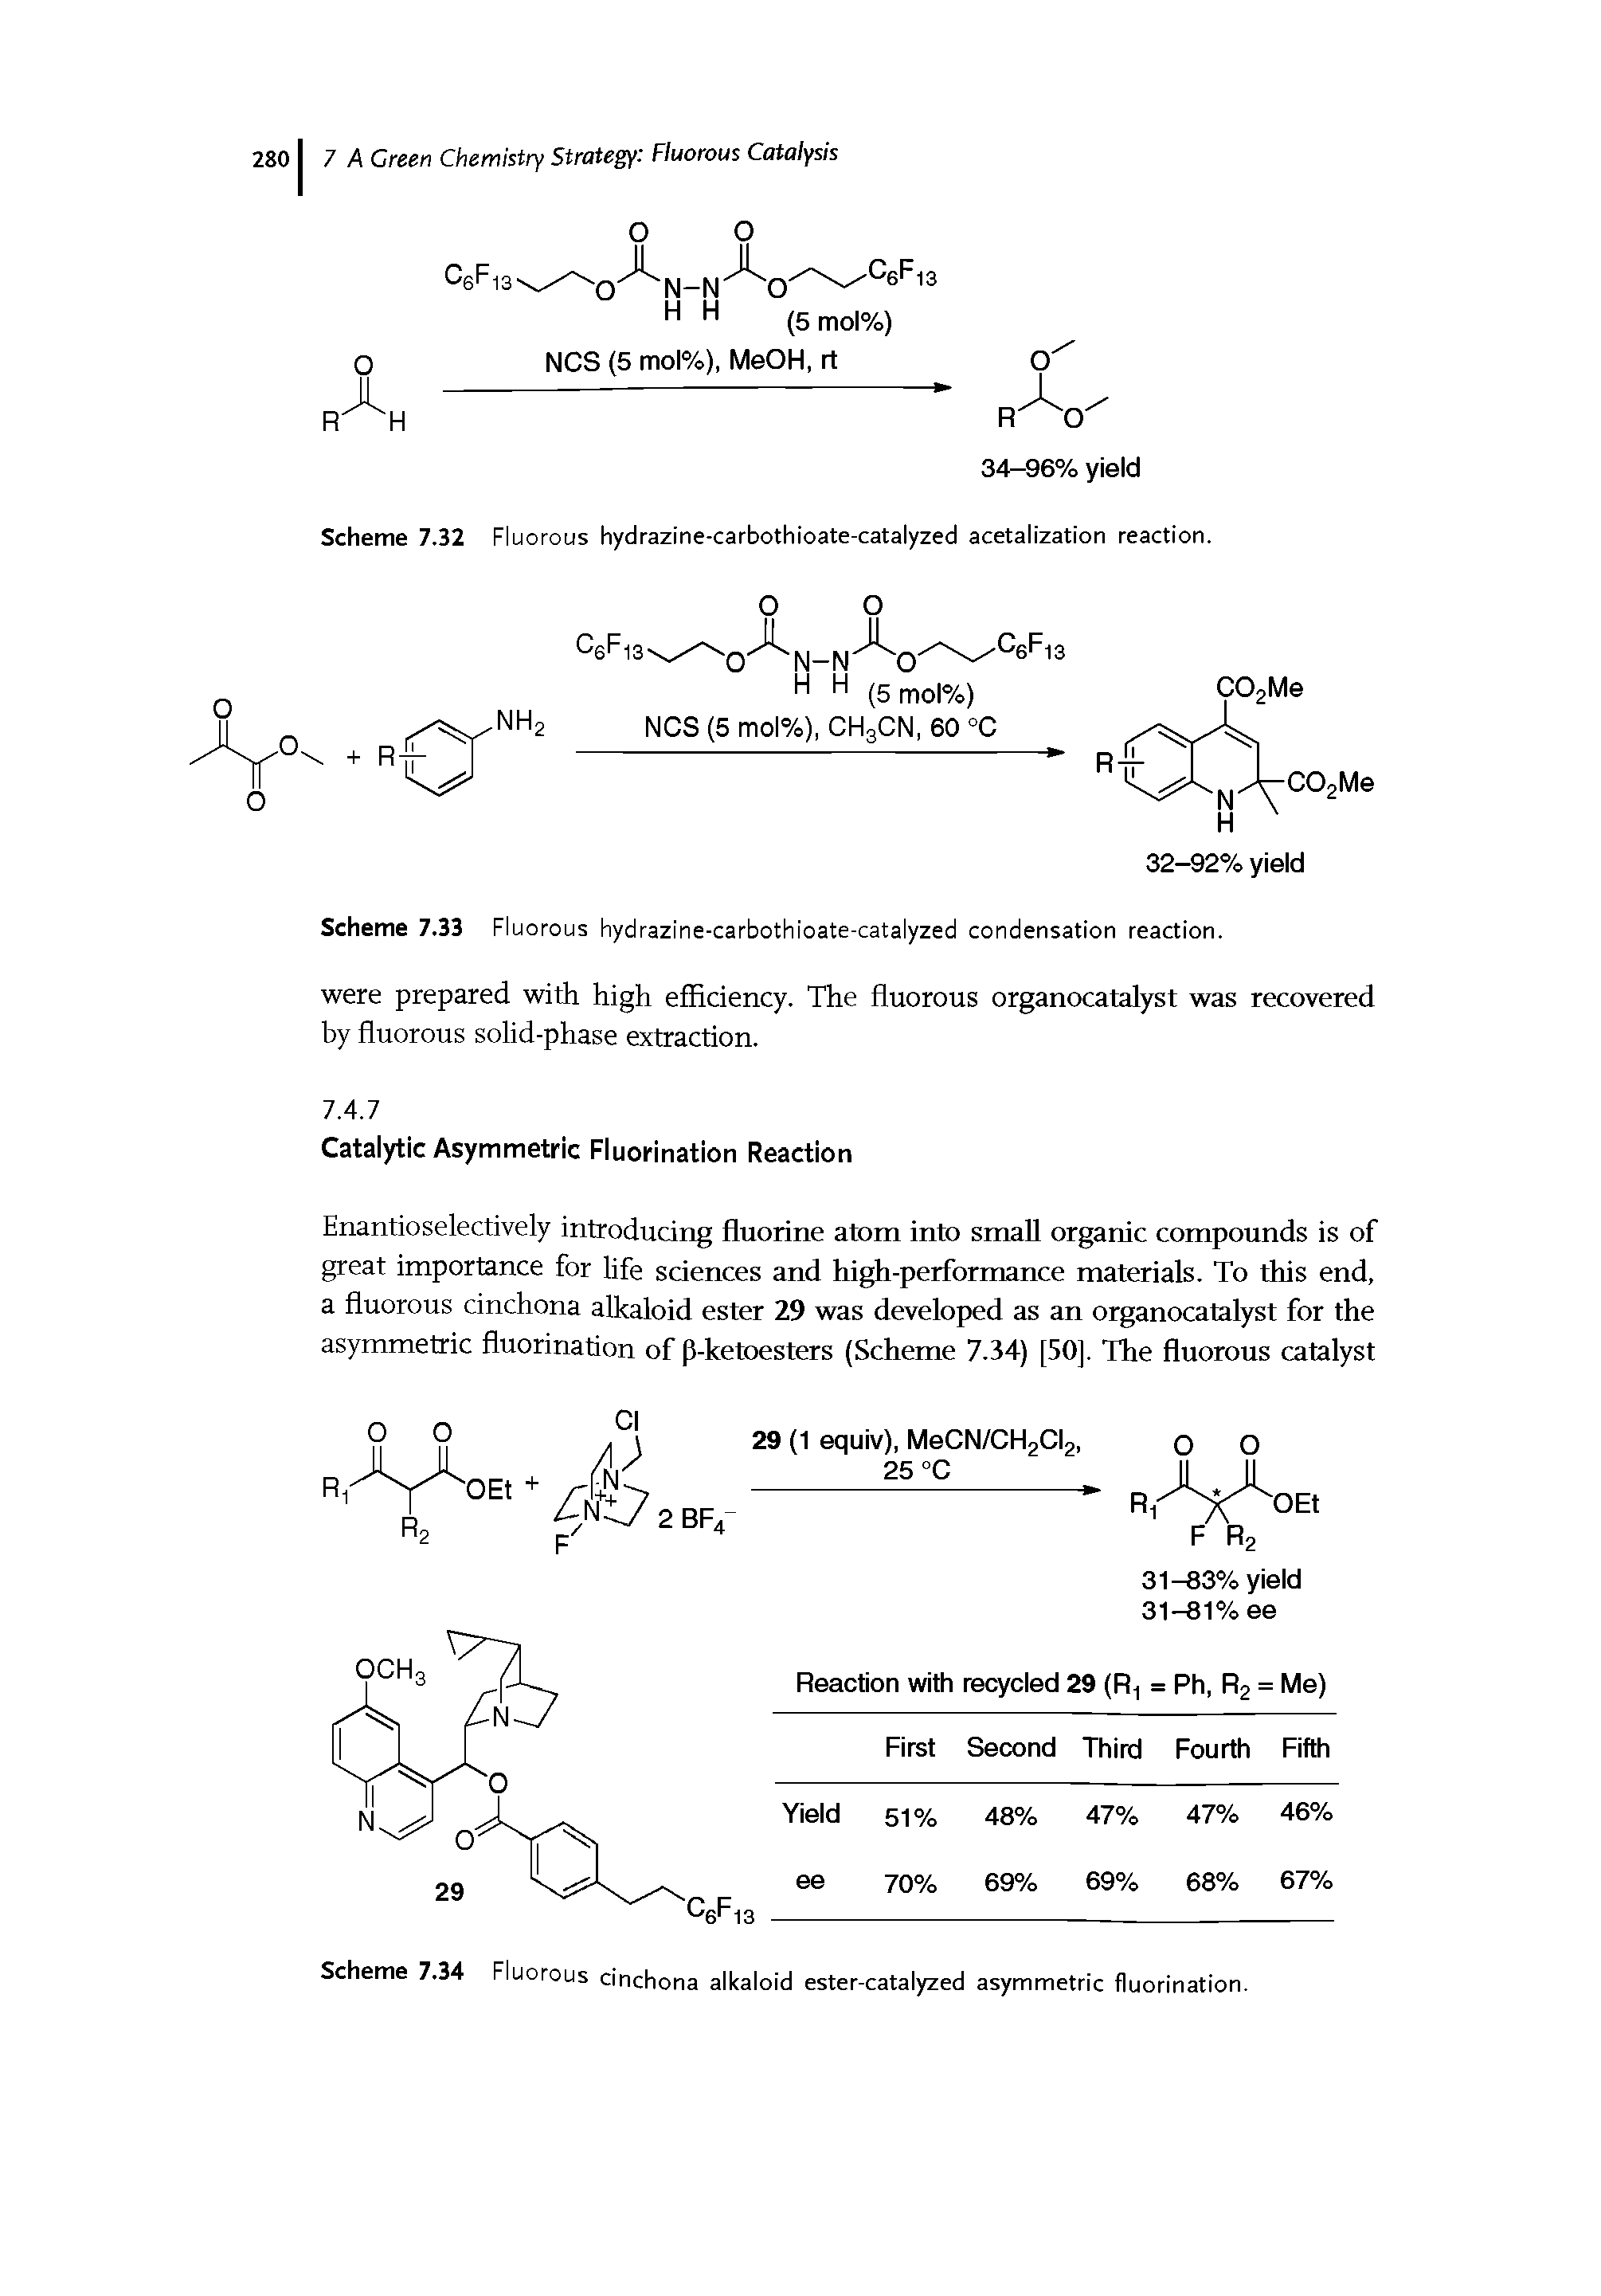 Scheme 7.34 Fluorous cinchona alkaloid ester-catalyzed asymmetric fluorination.